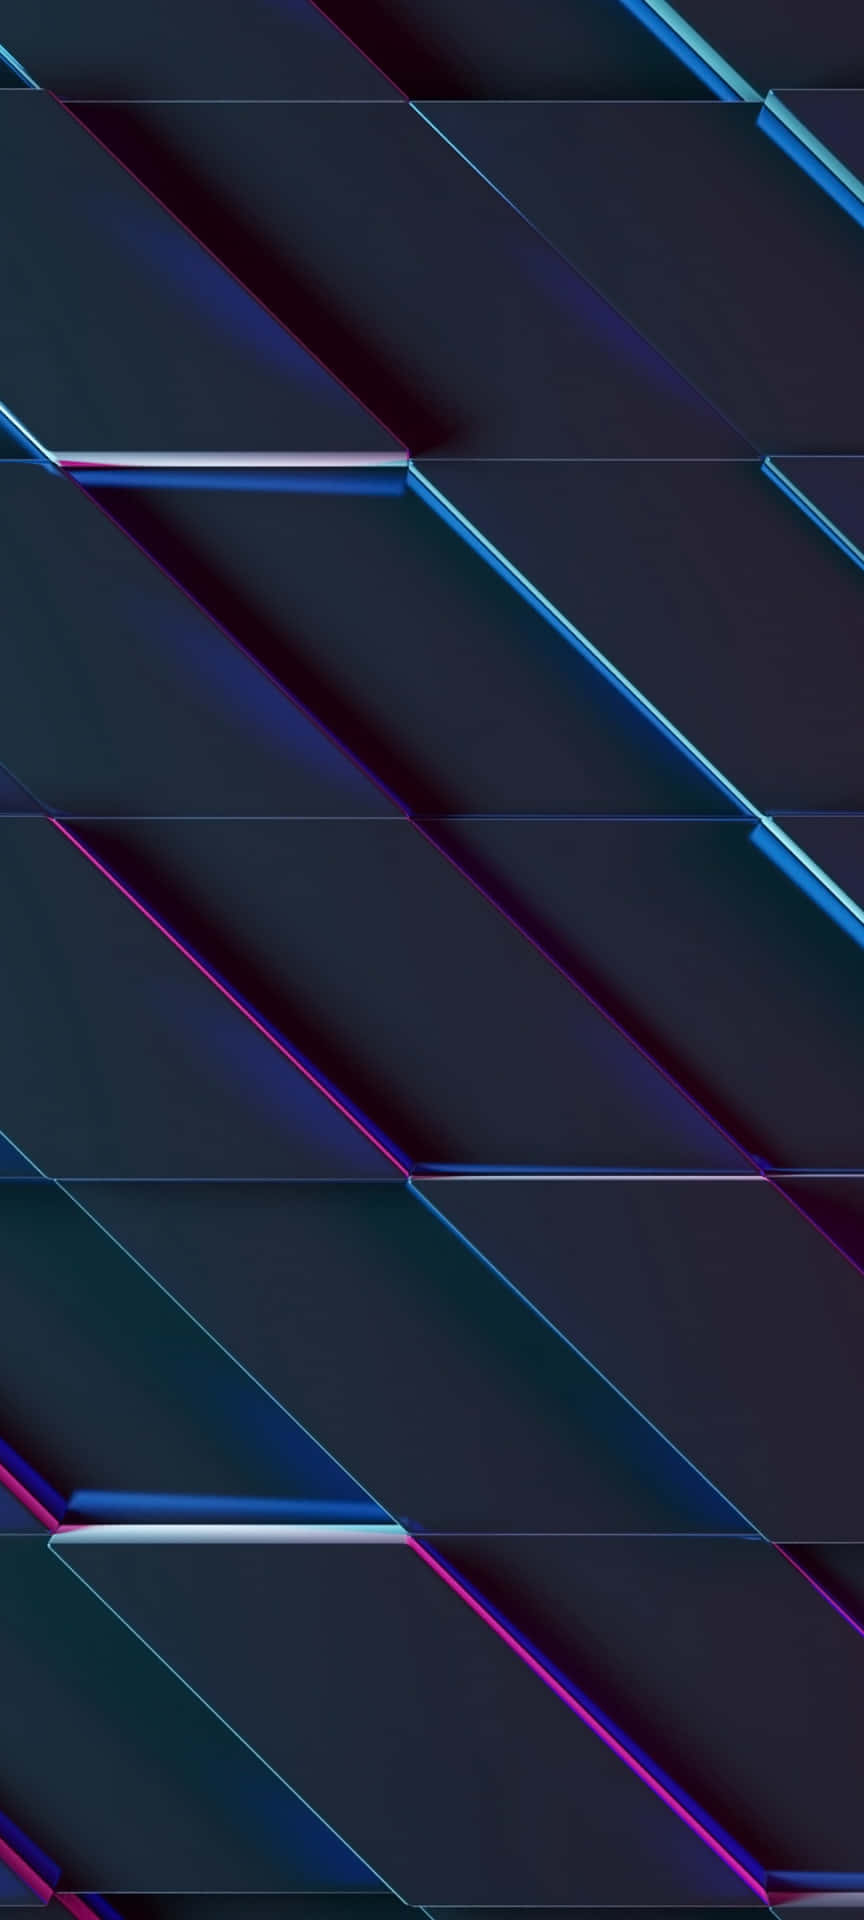 3d Ultraviolet Shapes Wallpaper